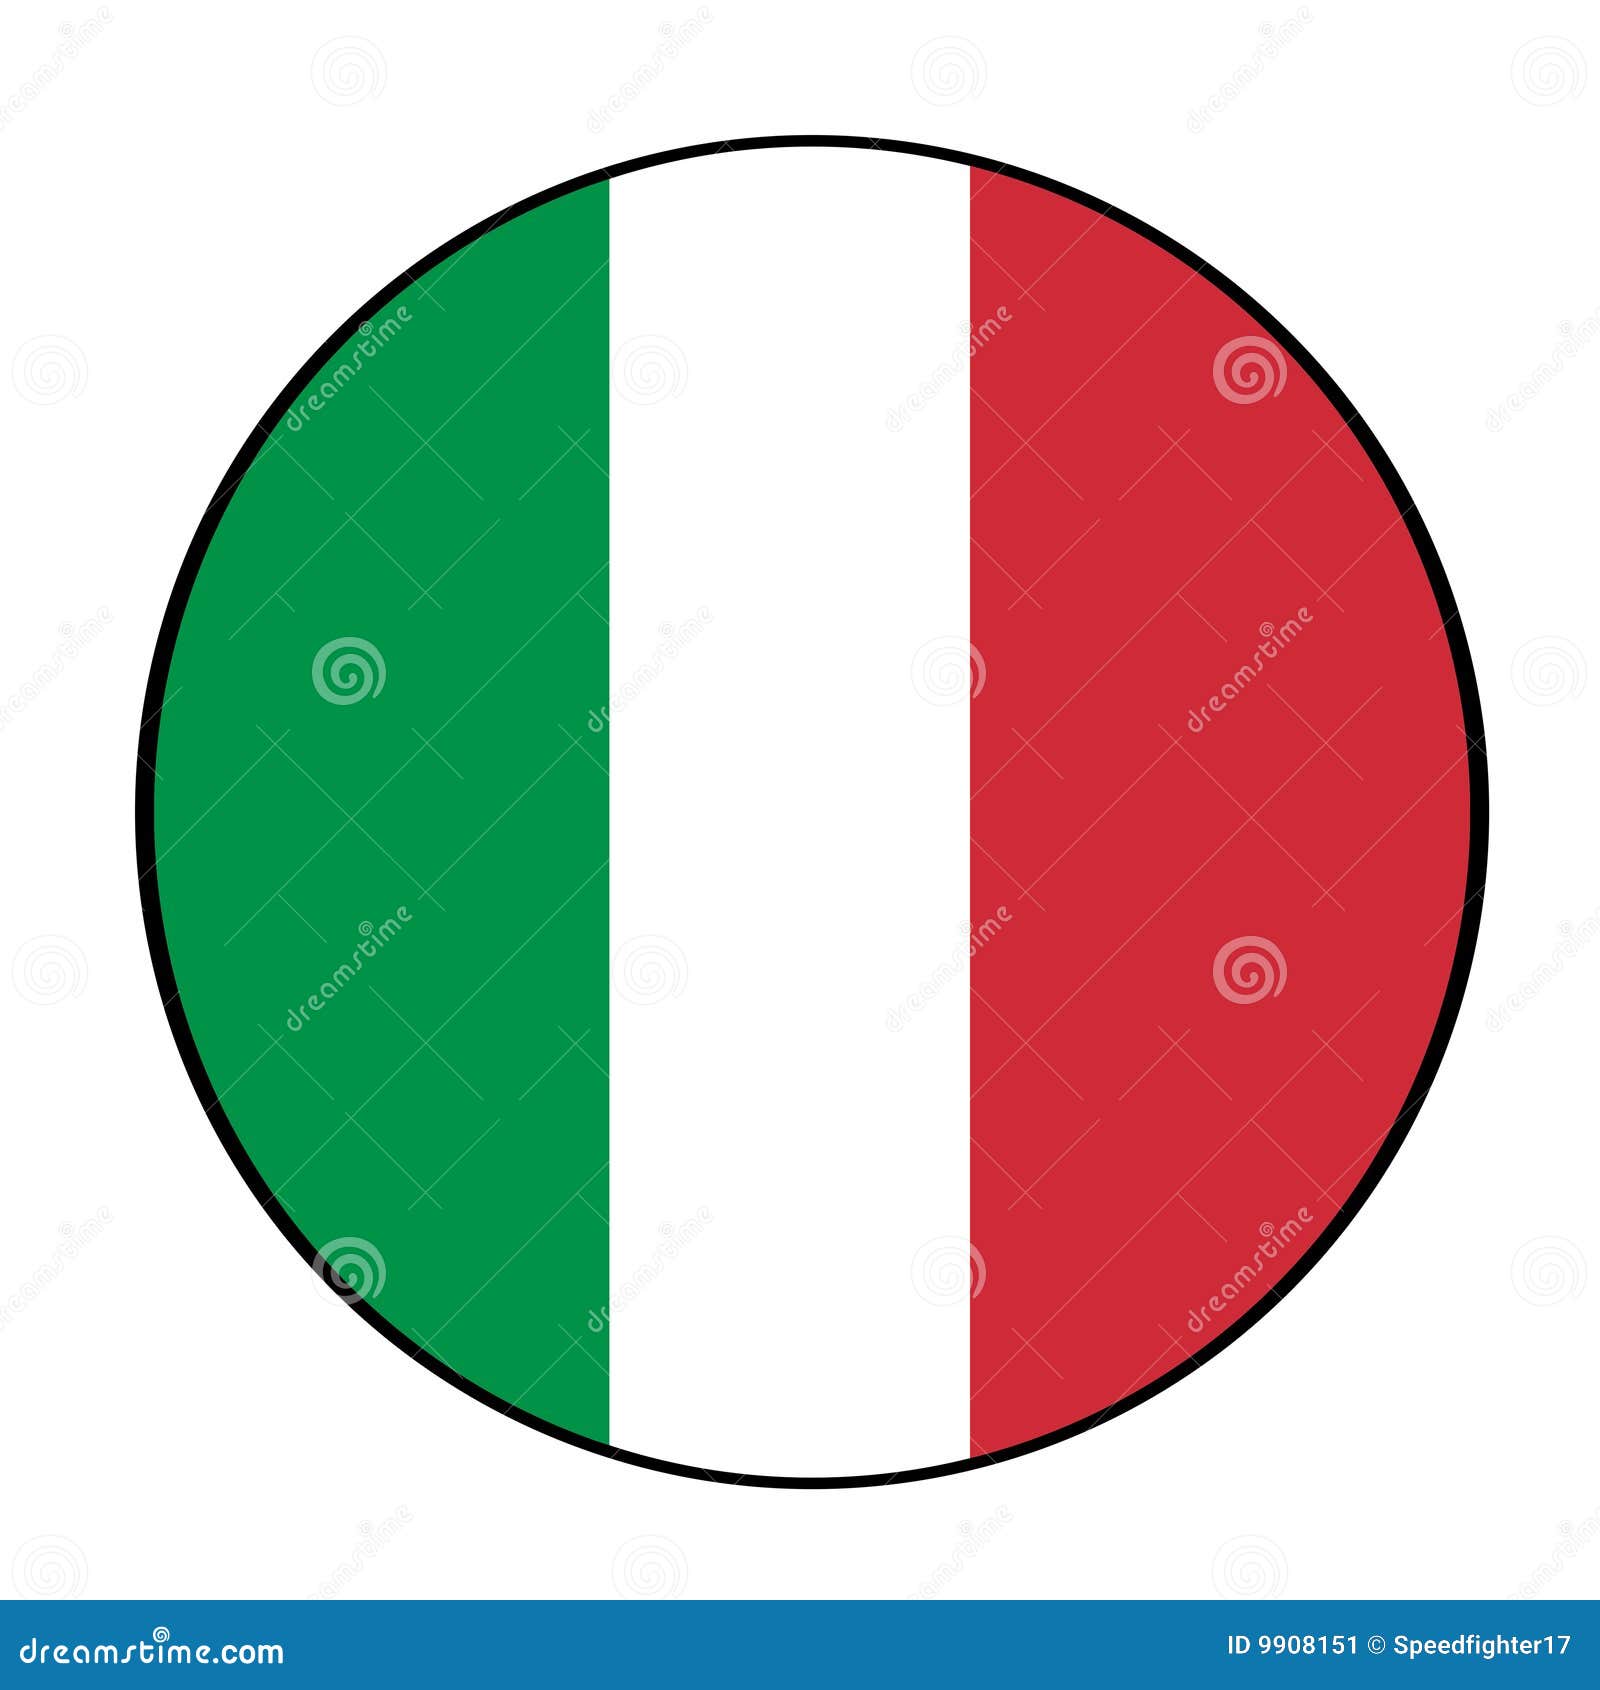 Italian flag icon button stock illustration. Illustration of business ...